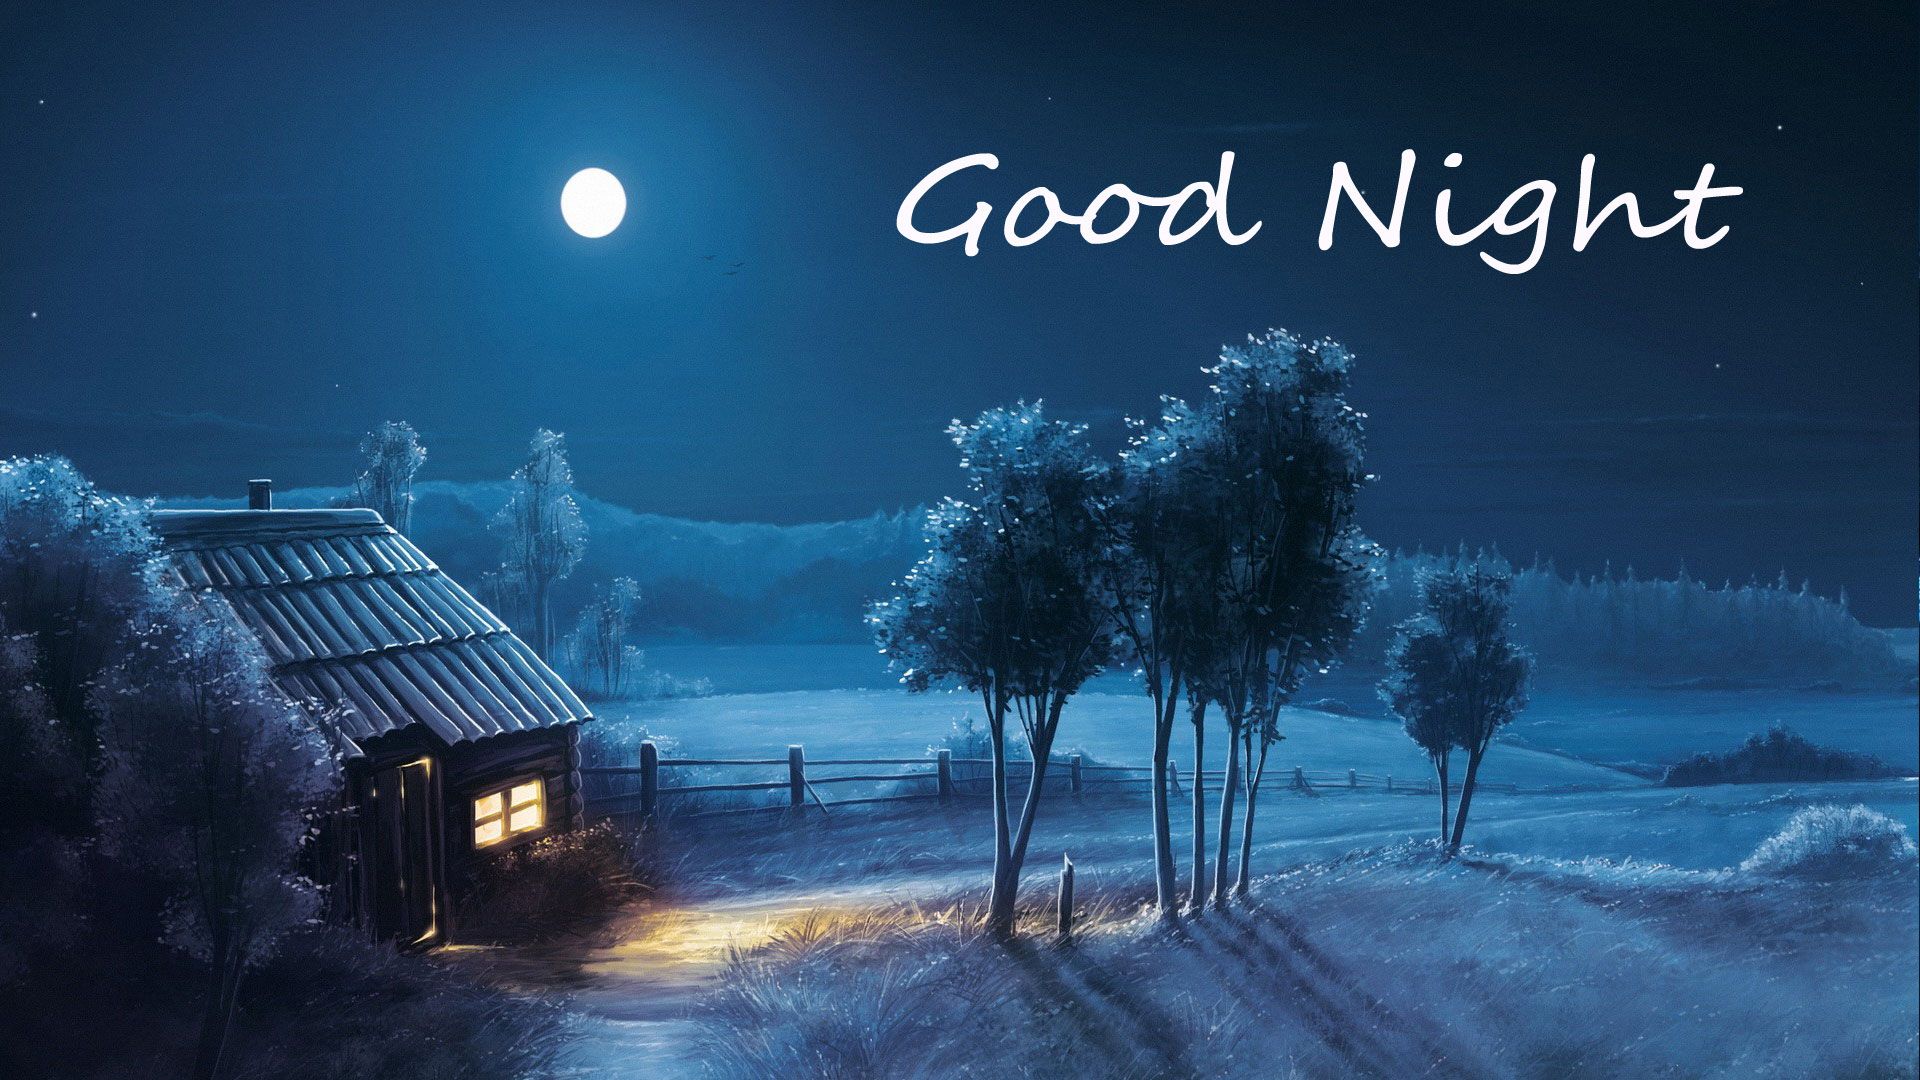 Good night home moon image